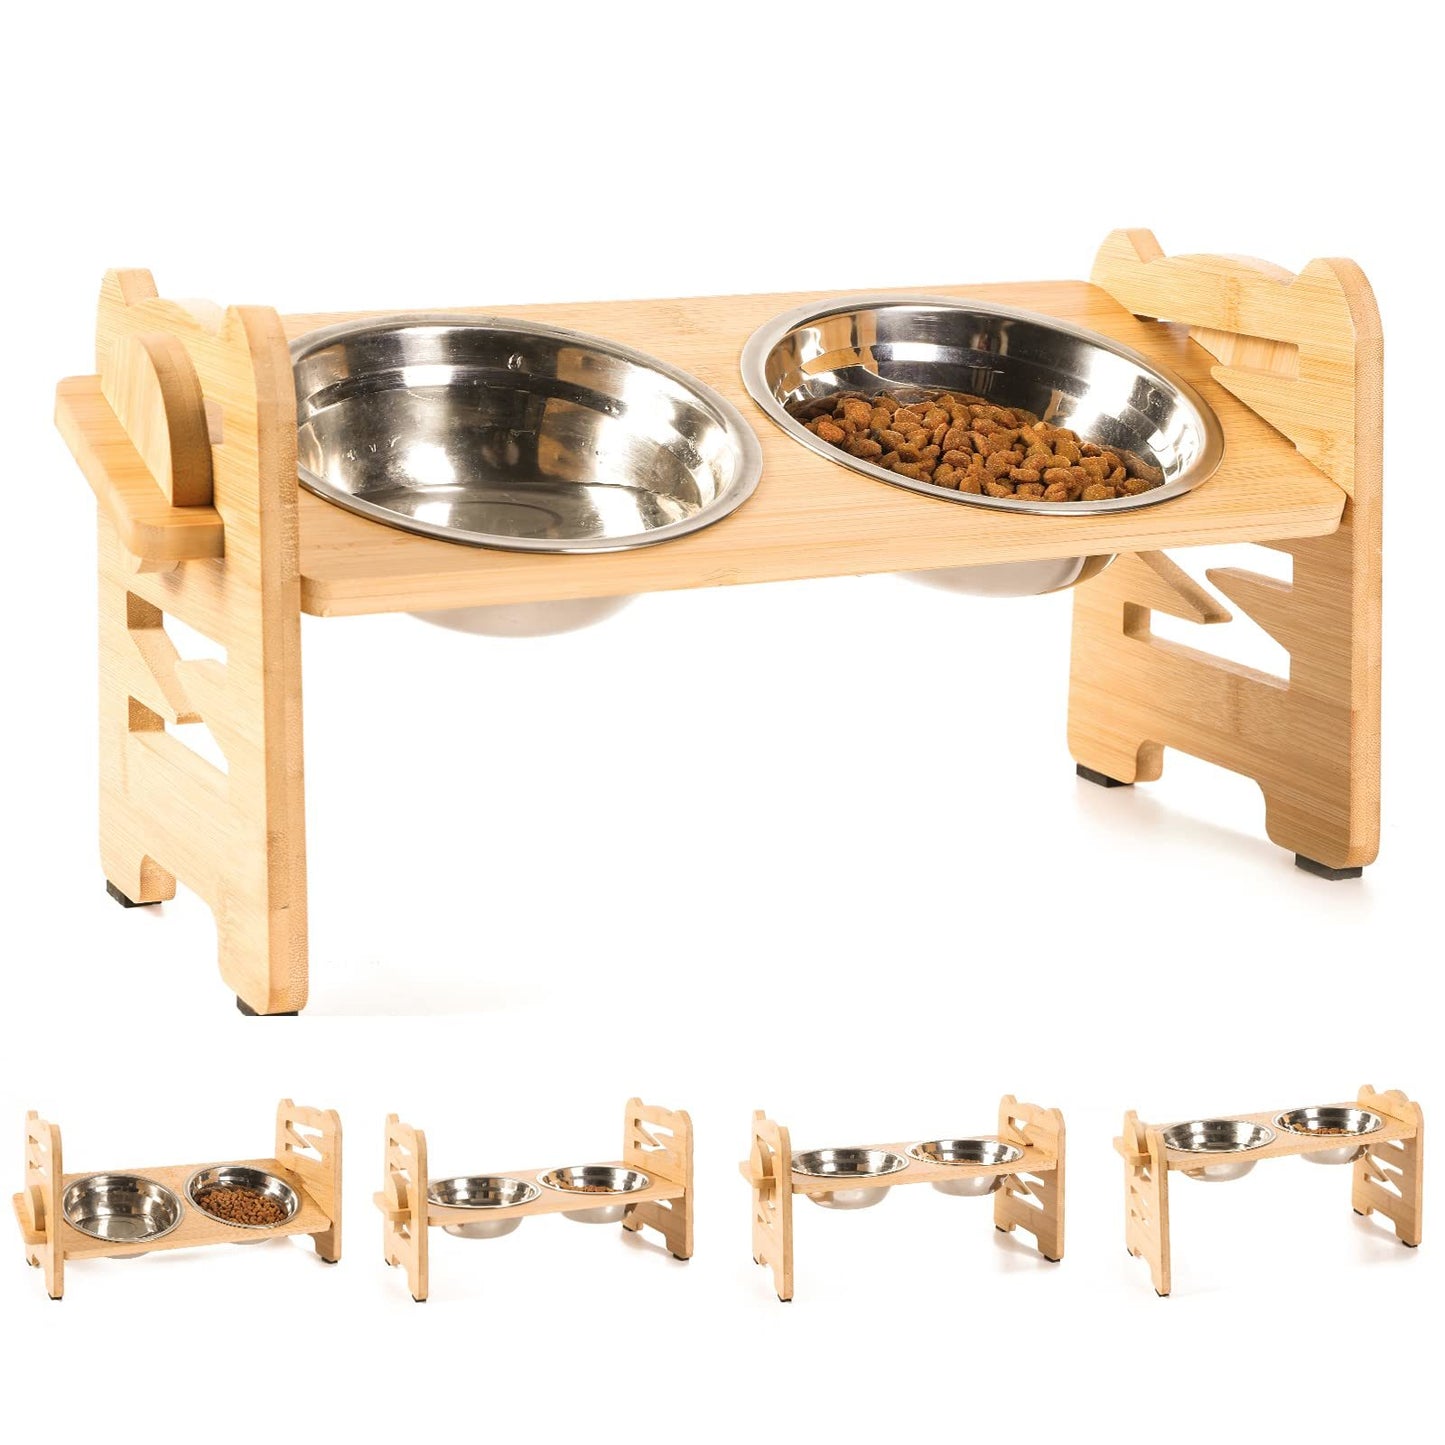 Elevated Dog & Cat Bowls, 6 Adjustable Heights Raised Food Water Feeder